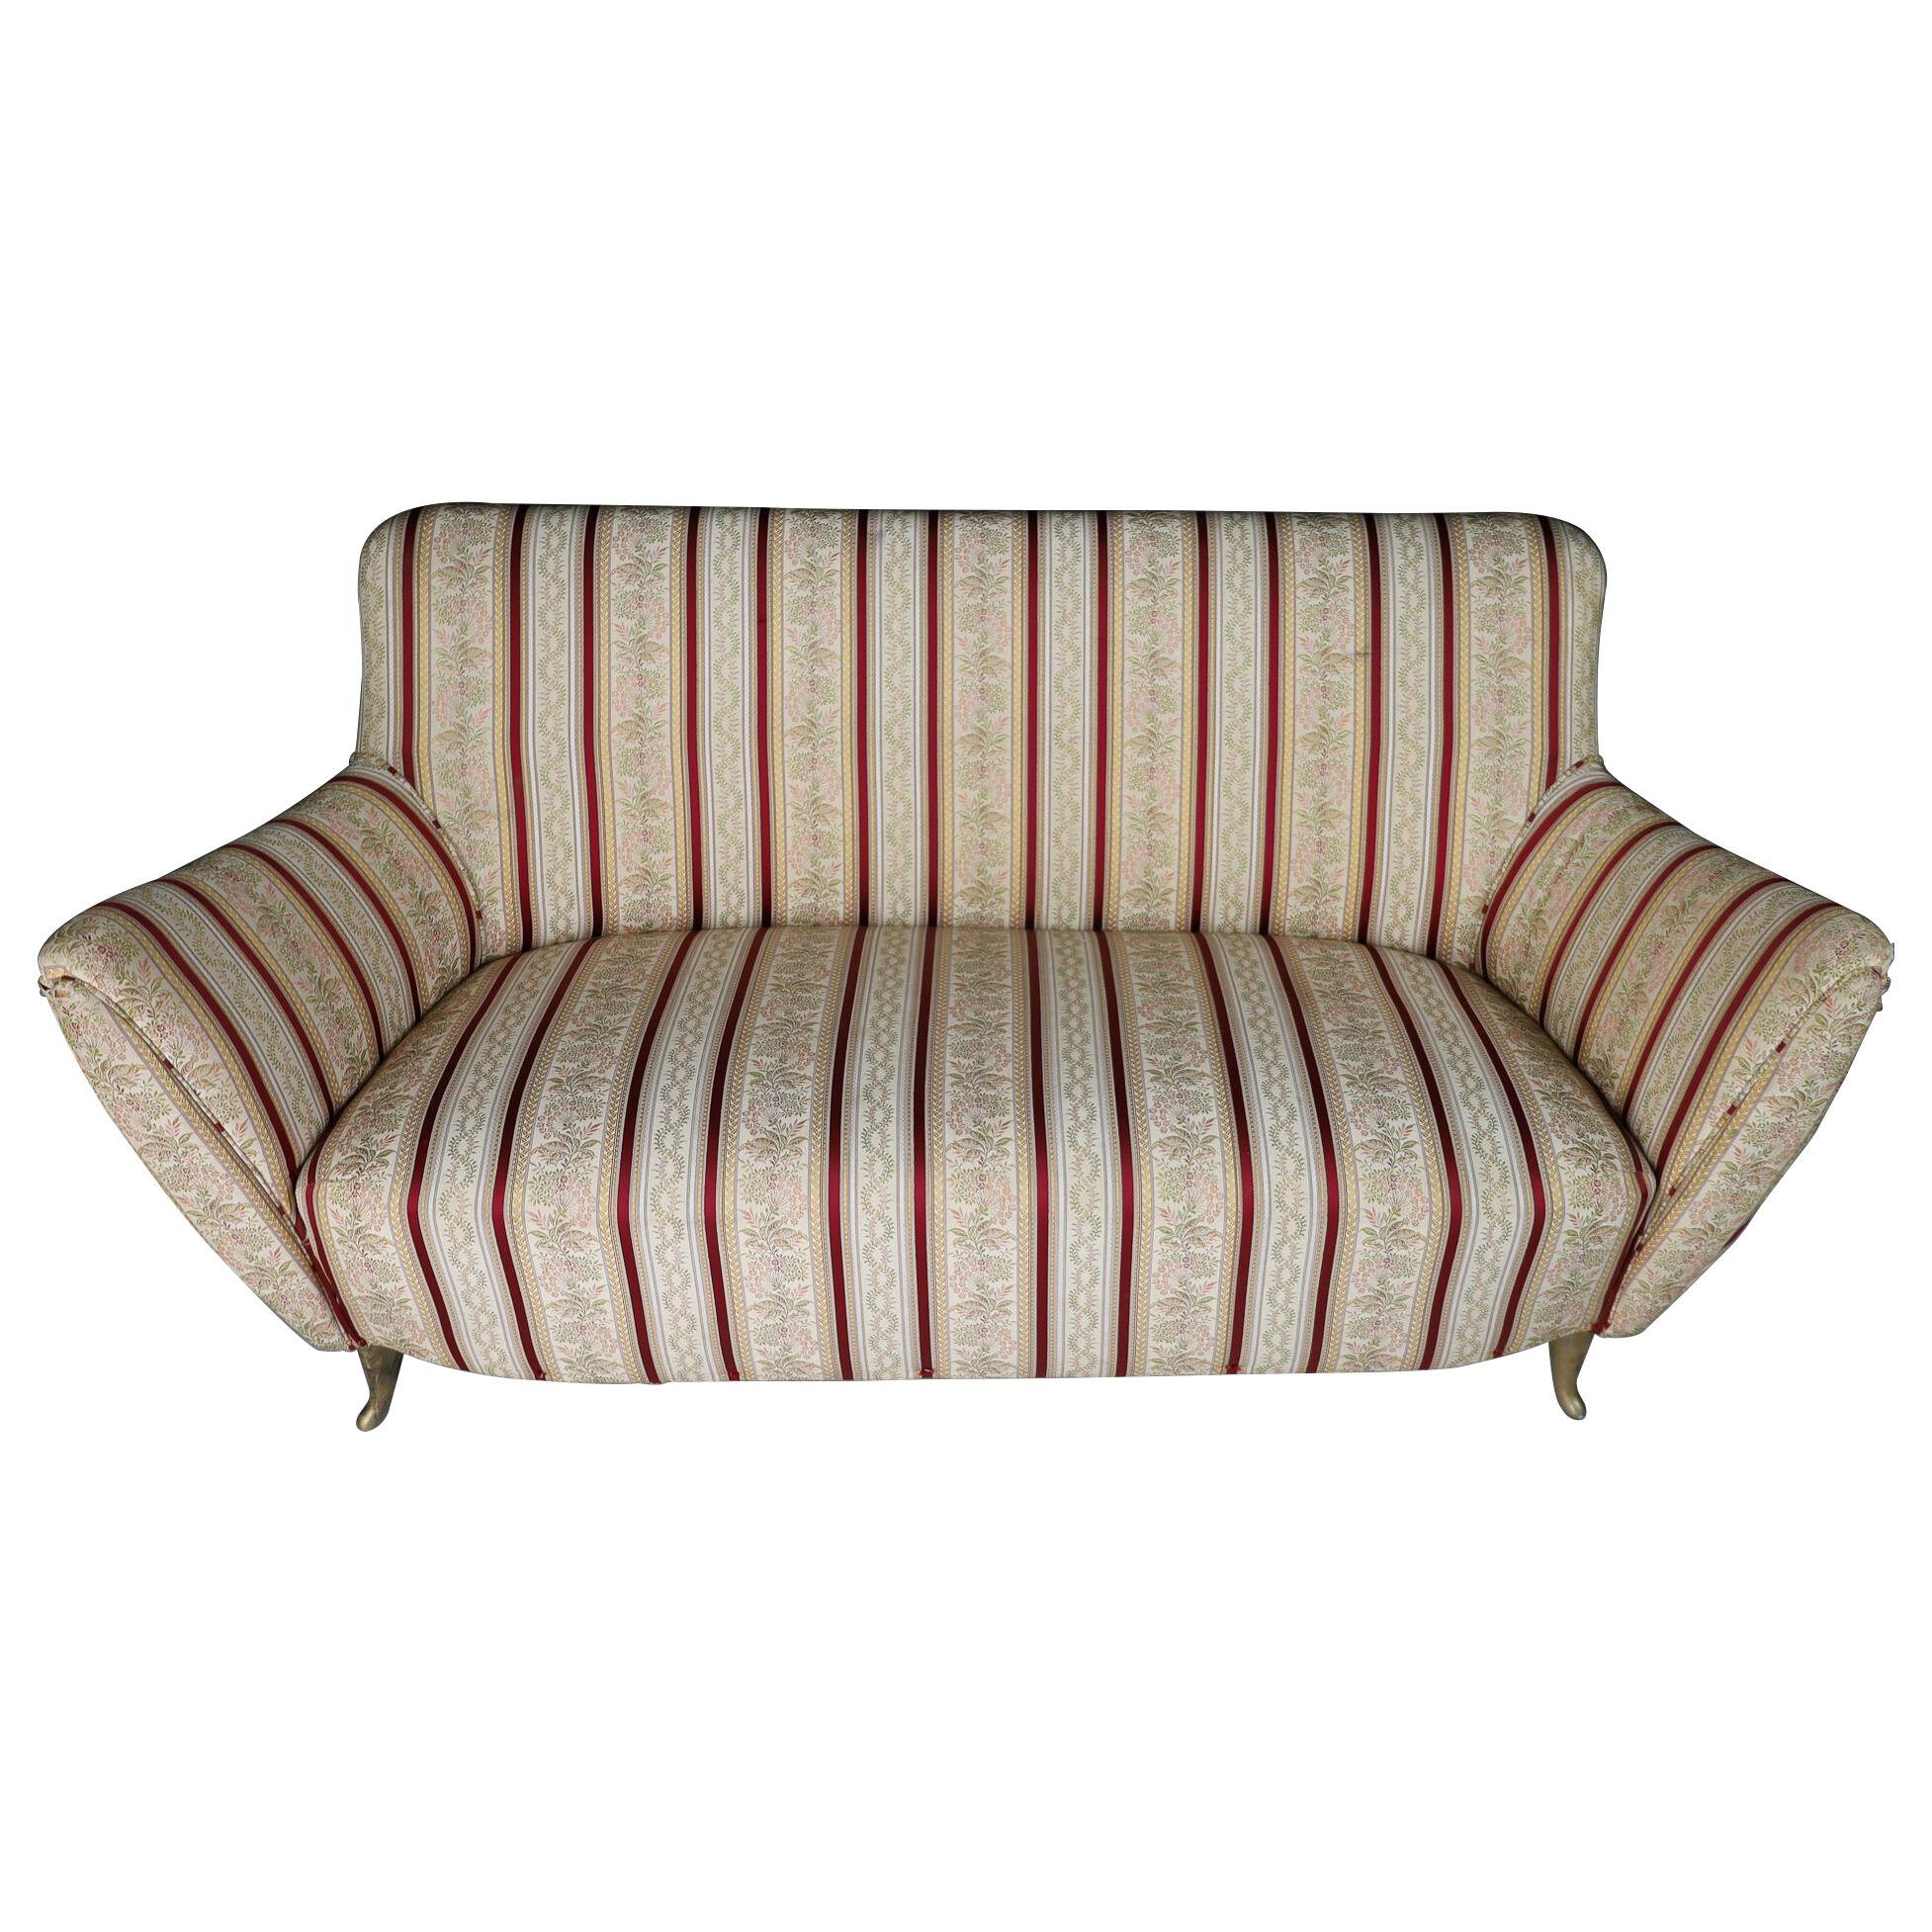 MidCentury Sofa in Original Upholstery by Guglielmo Veronesi for Isa Bergamo'50s